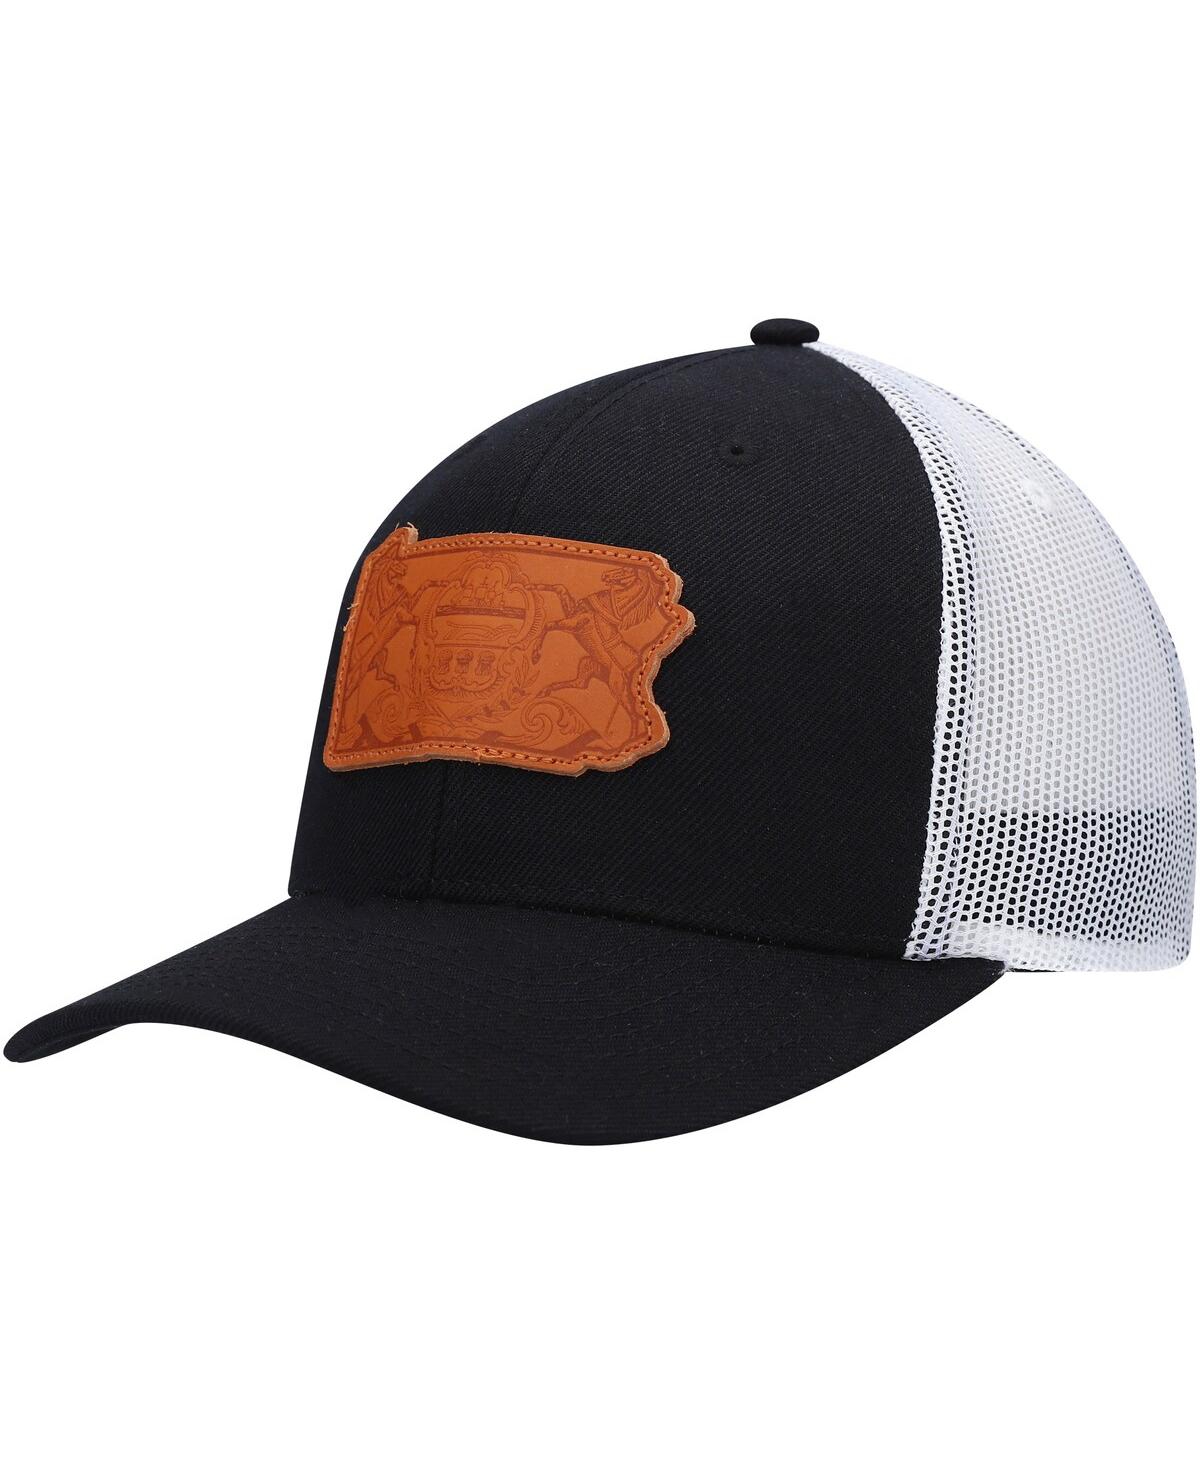 Local Crowns Men's  Black Pennsylvania Leather State Applique Trucker Snapback Hat